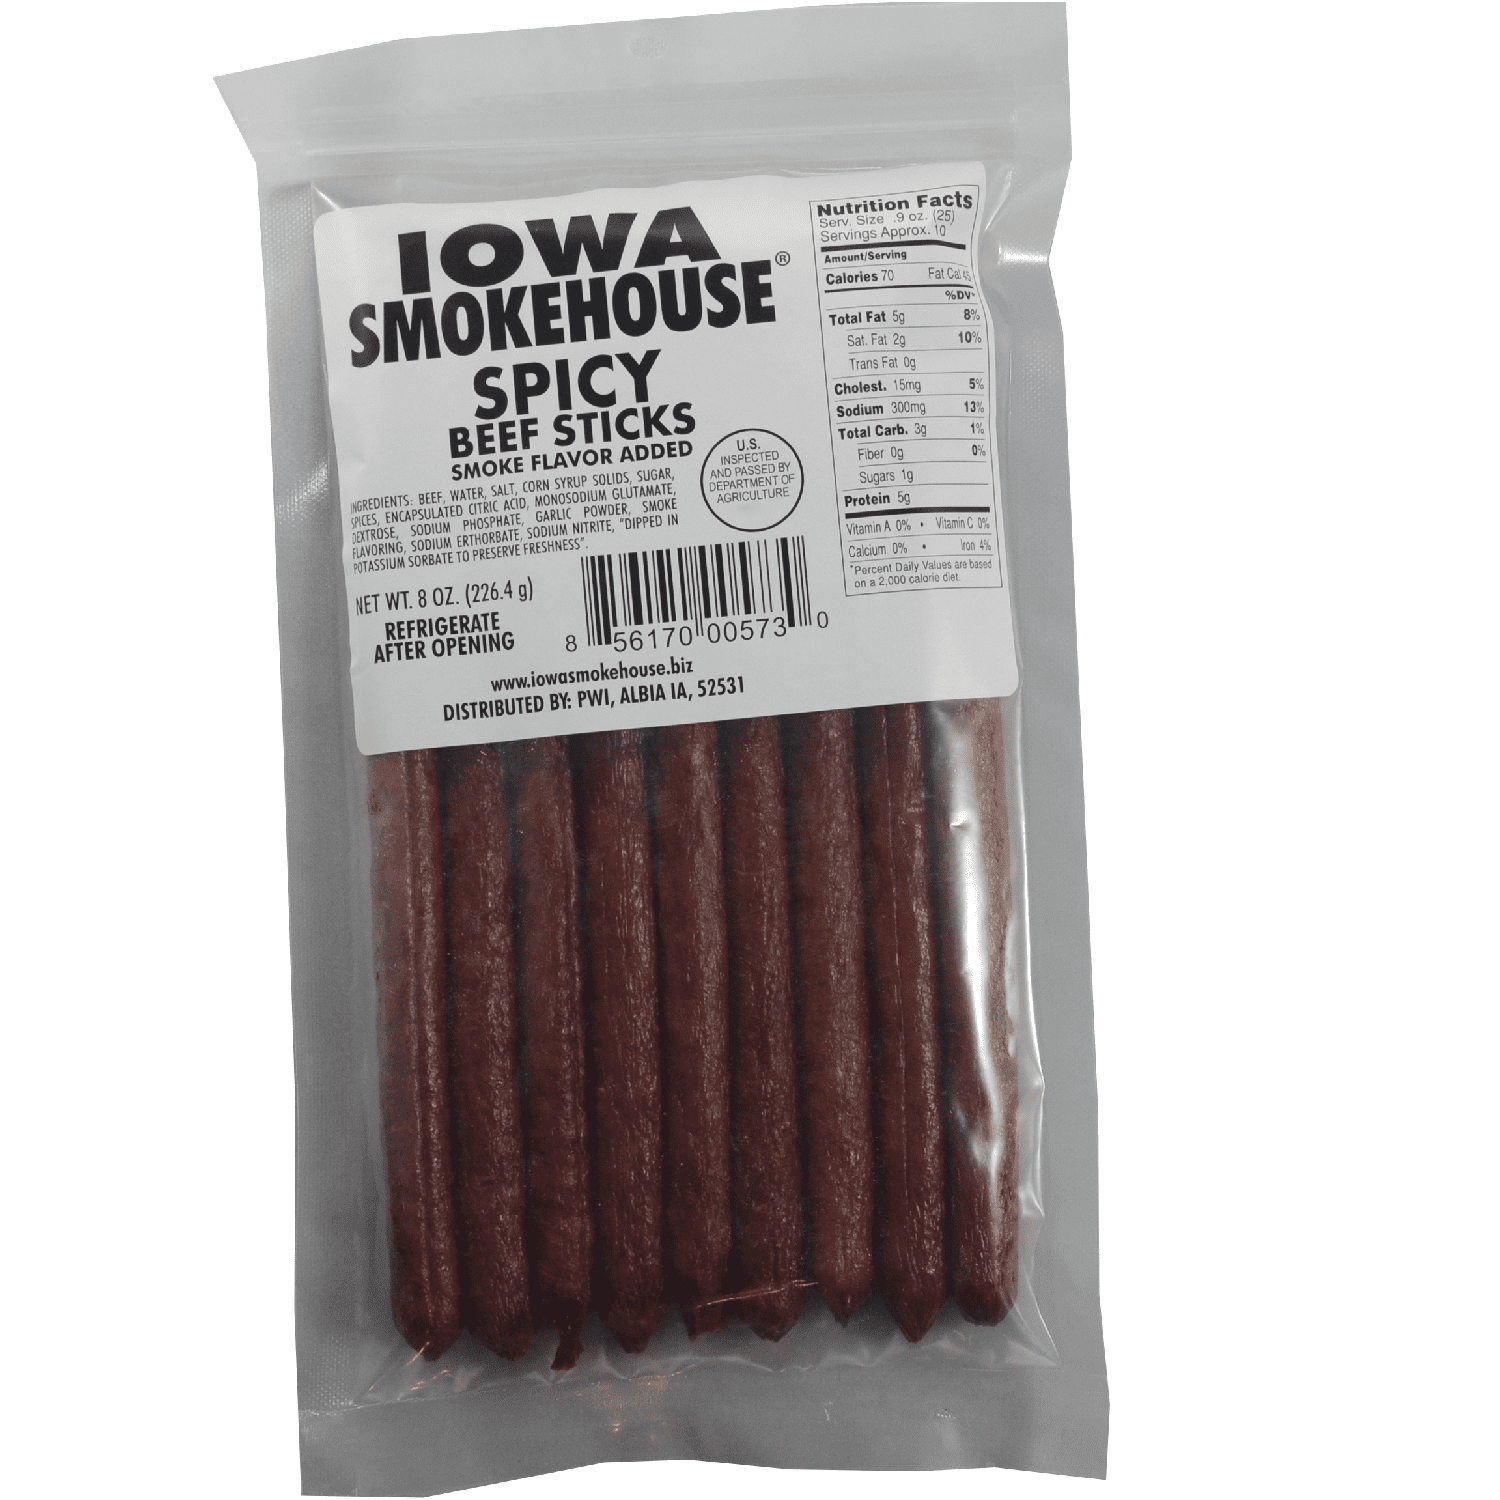 8 oz Beef Sticks Spicy - IOWA SMOKEHOUSE